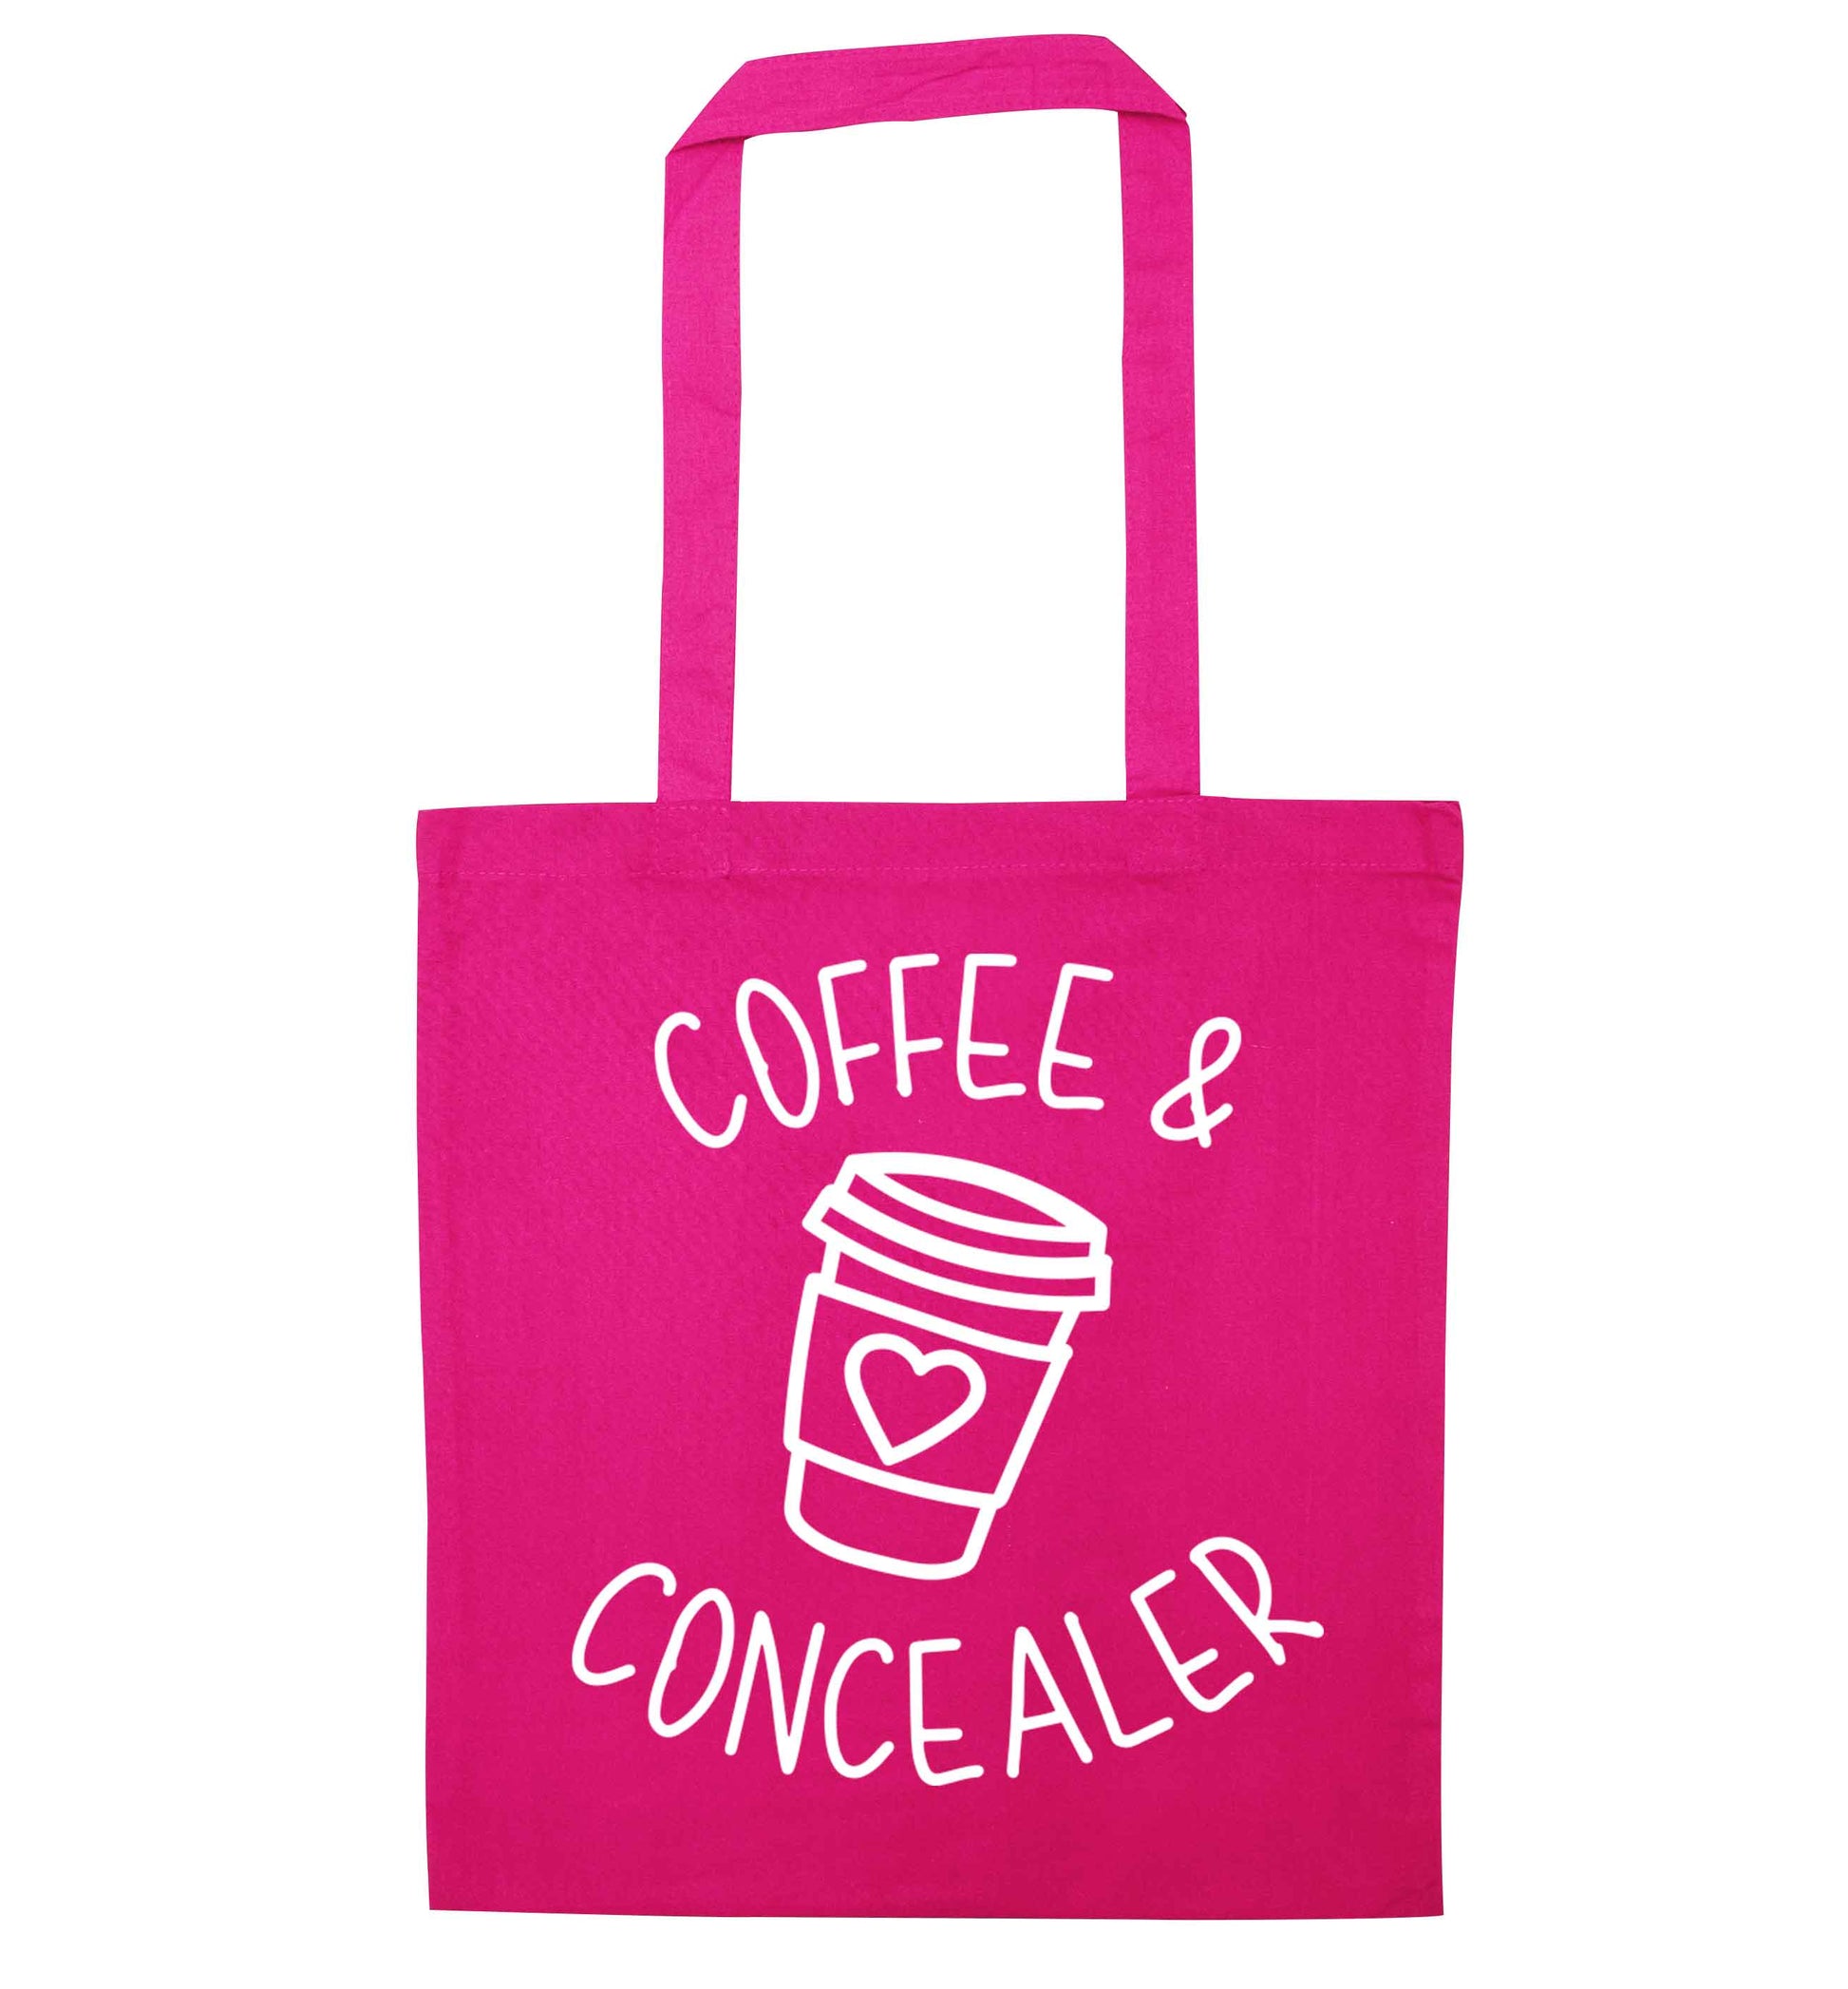 Coffee and concealer pink tote bag